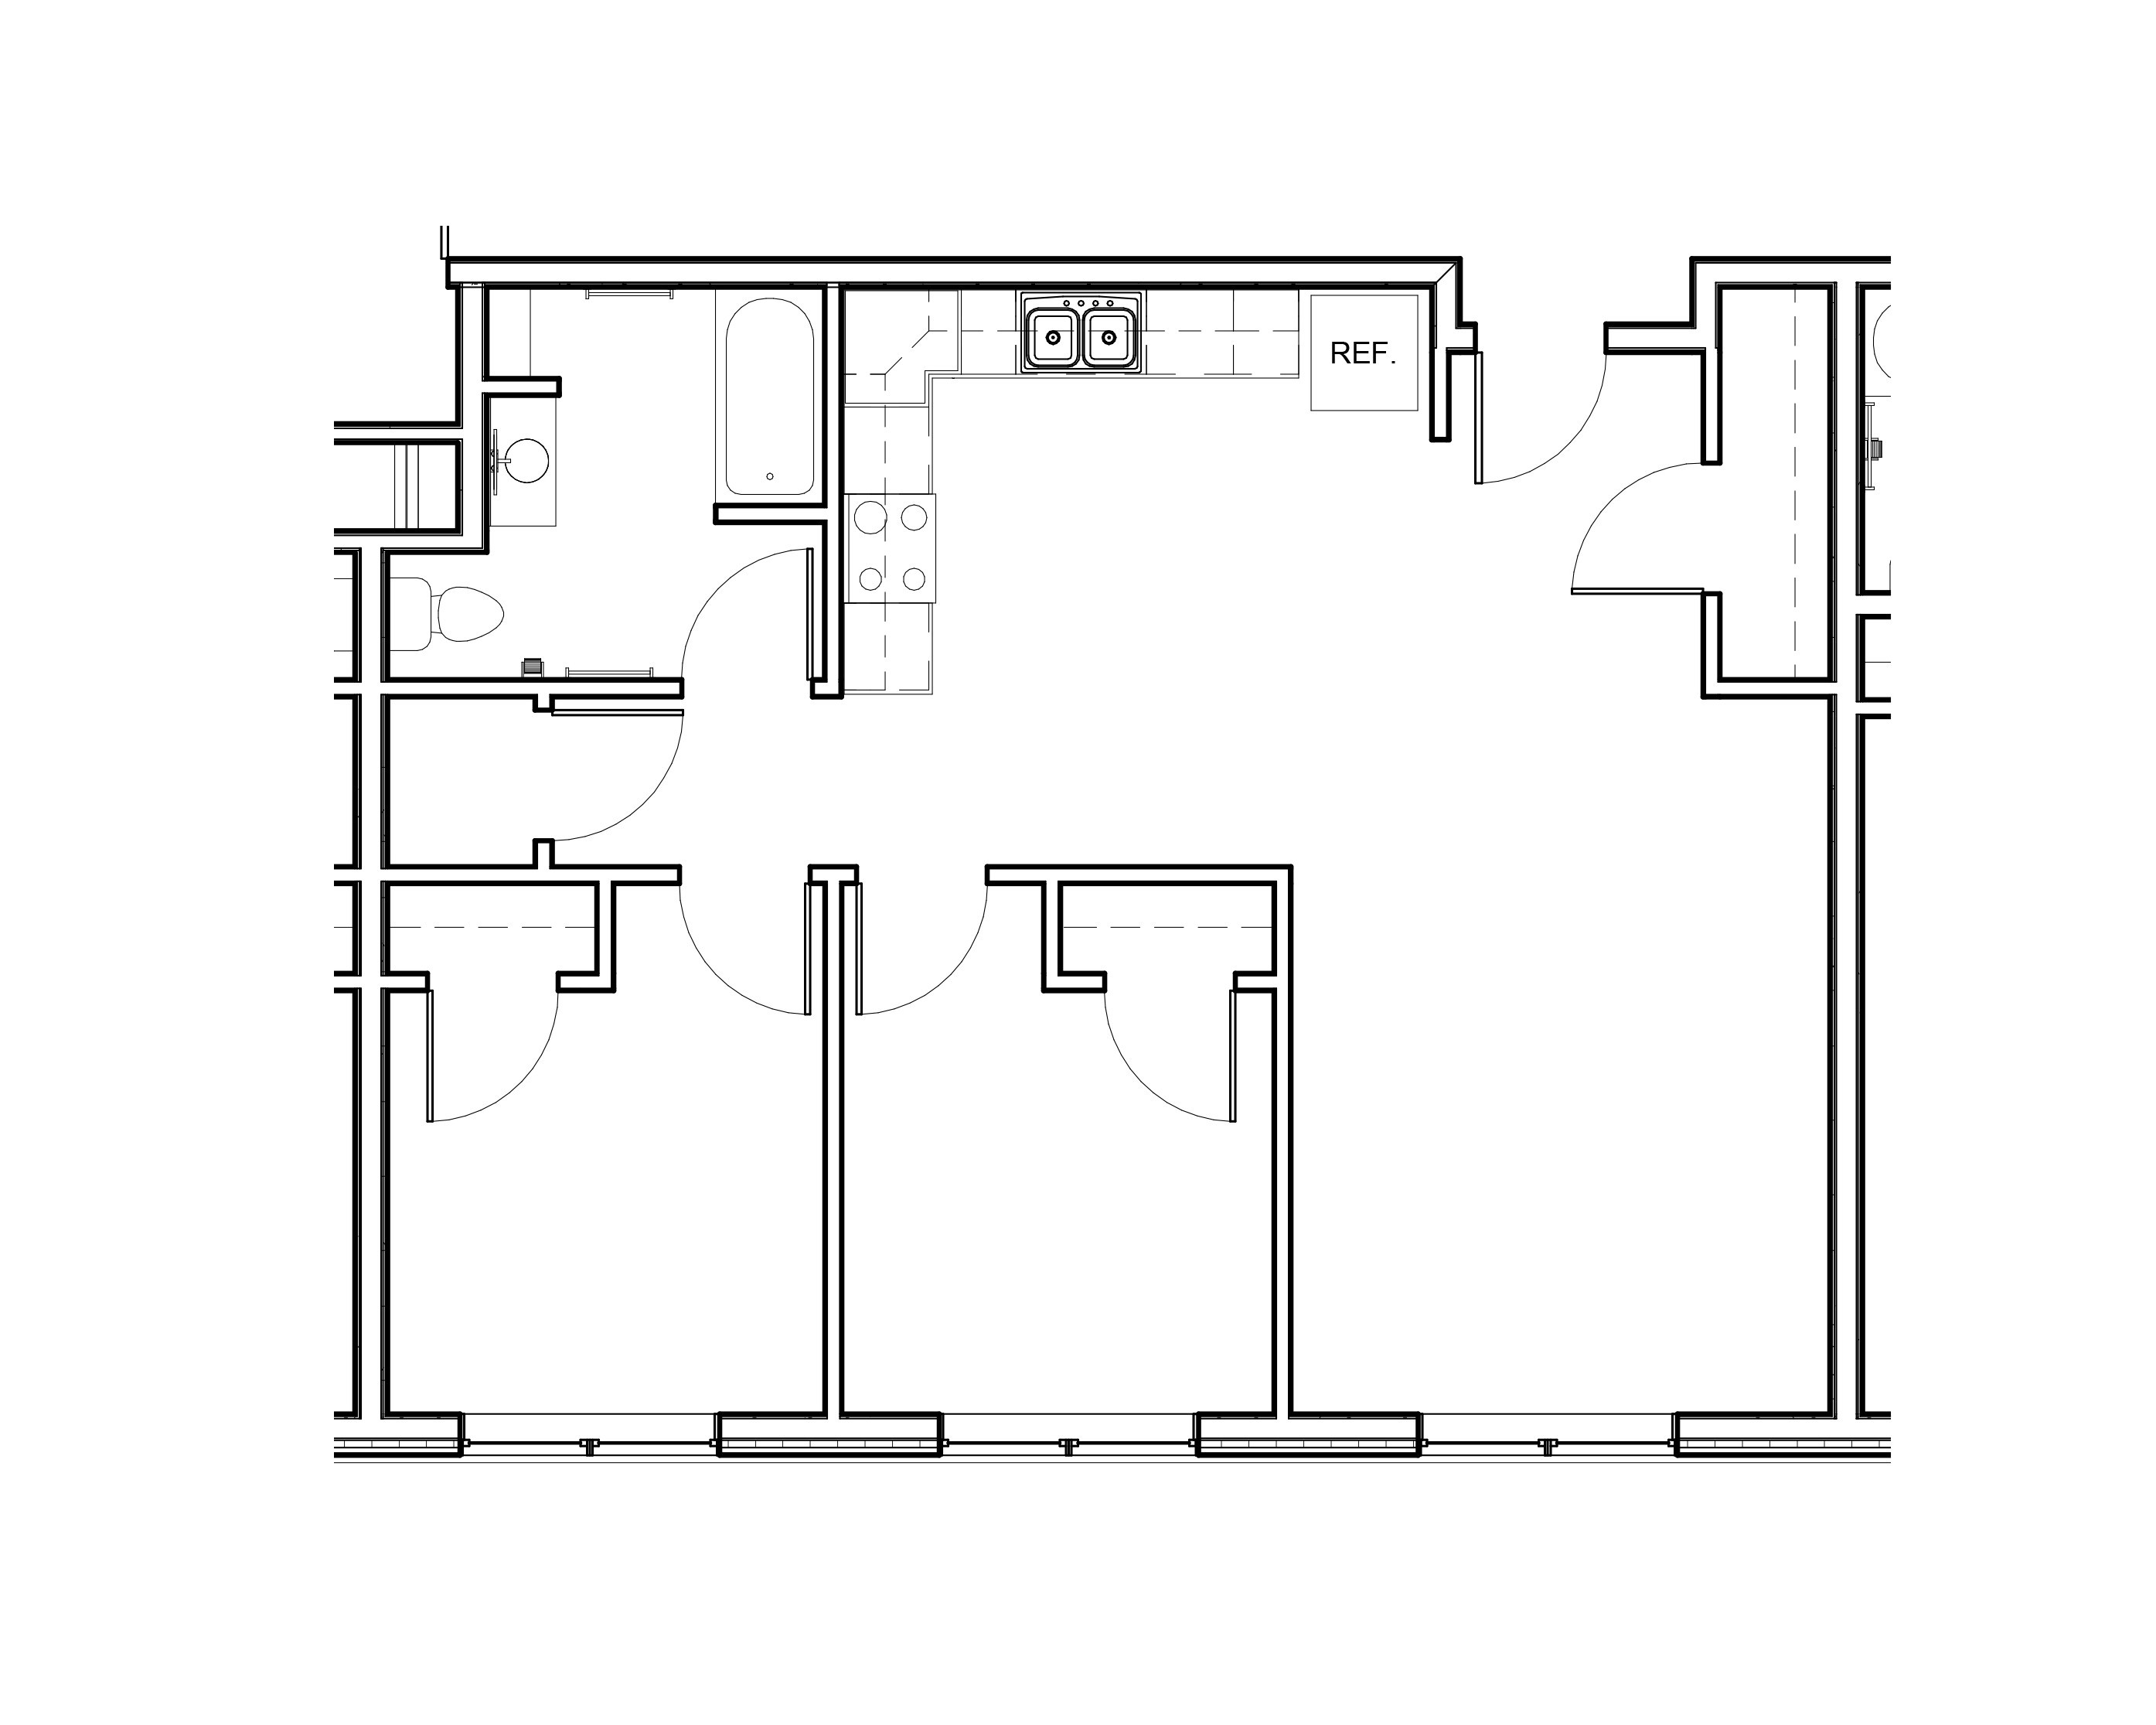 downstreet apartments floor plan